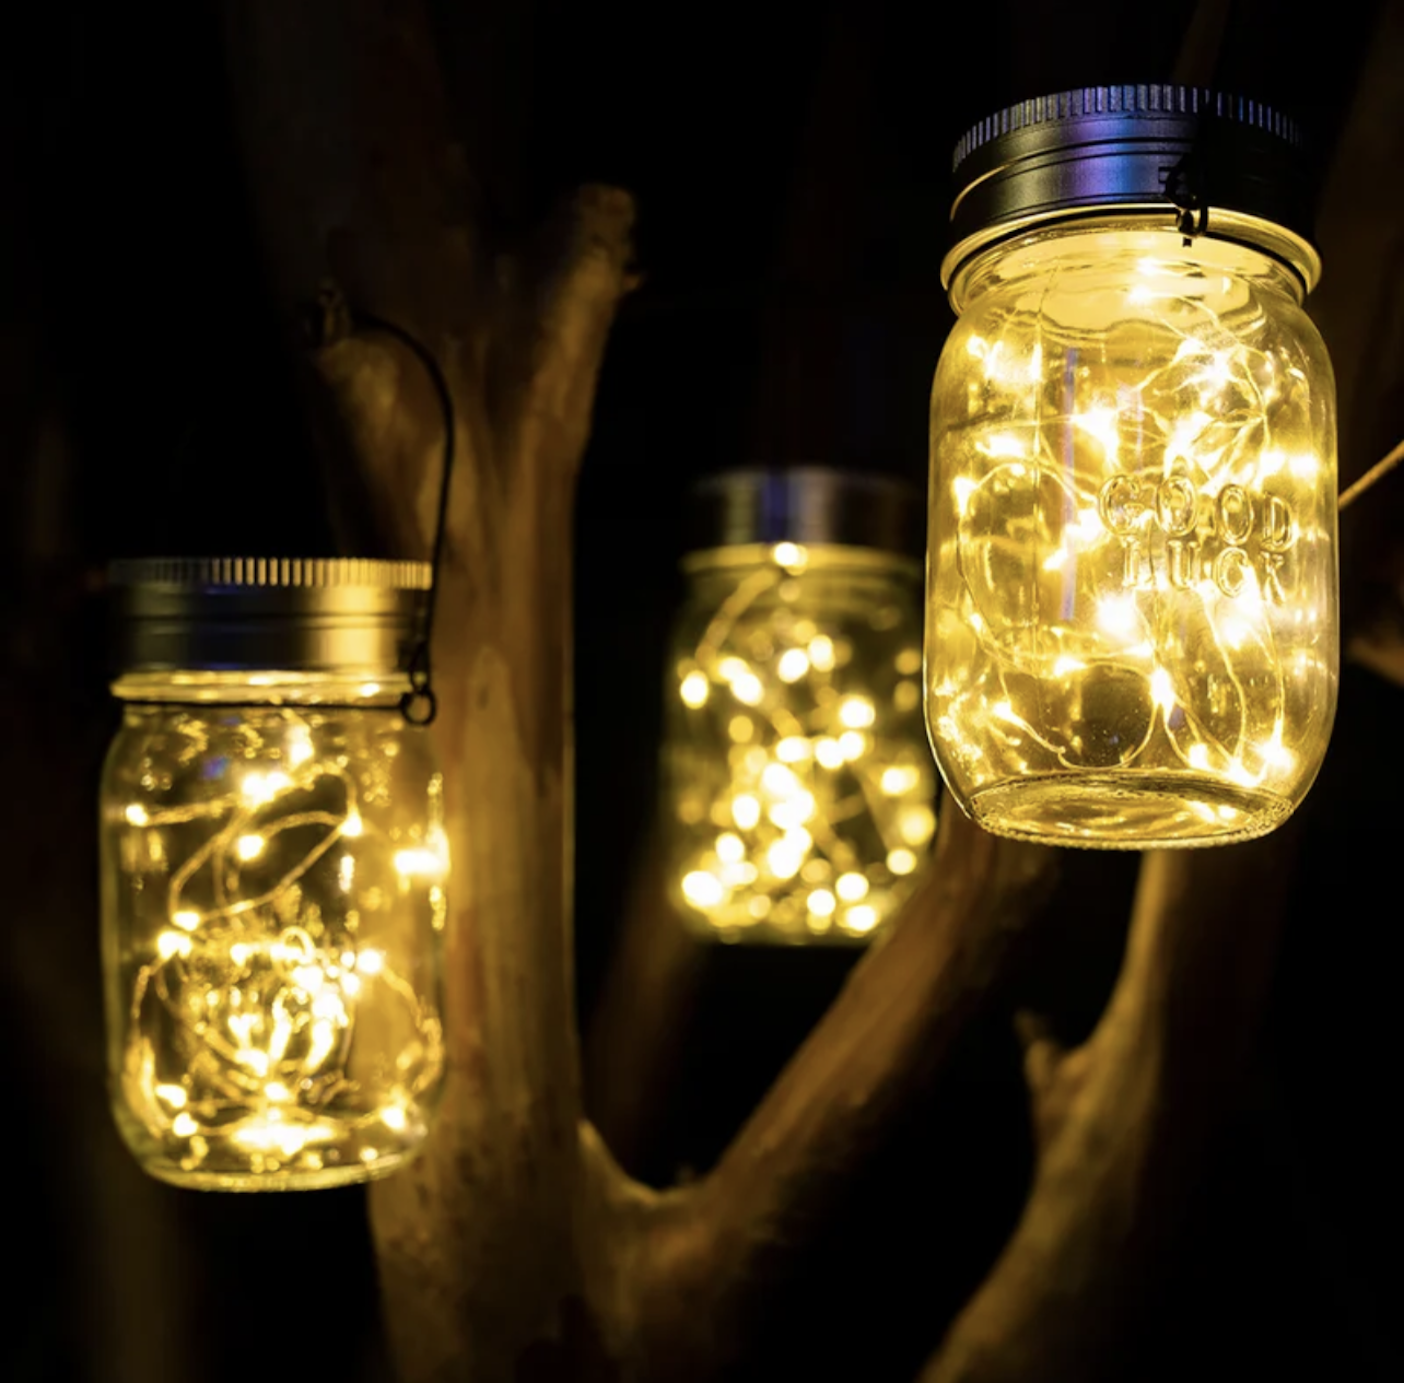 group of three lanterns made of mason jars with lights inside